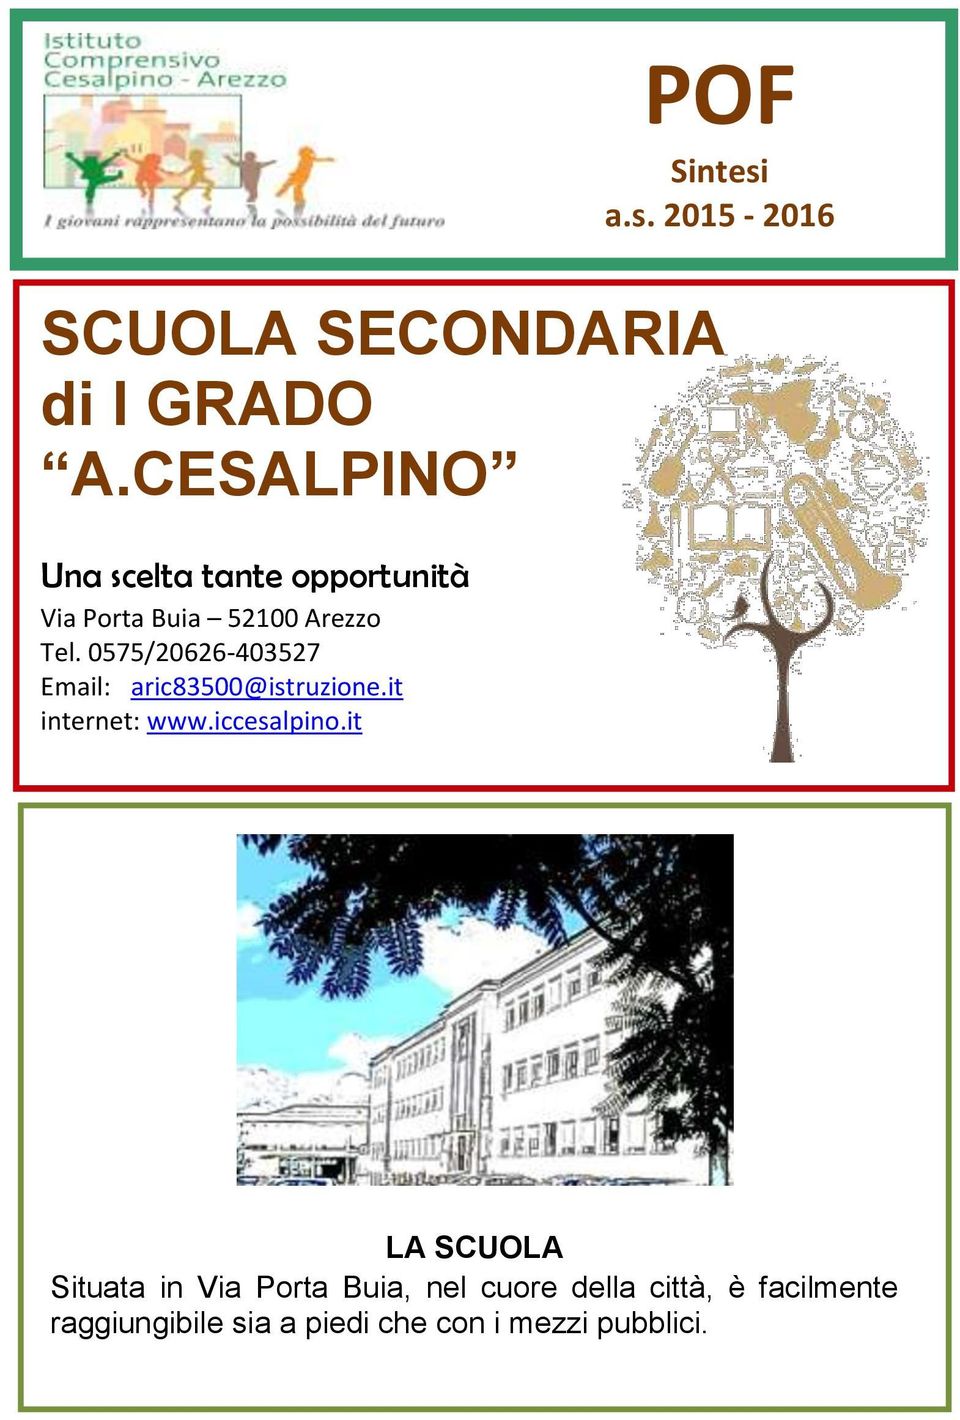 0575/20626-403527 Email: aric83500@istruzione.it internet: www.iccesalpino.